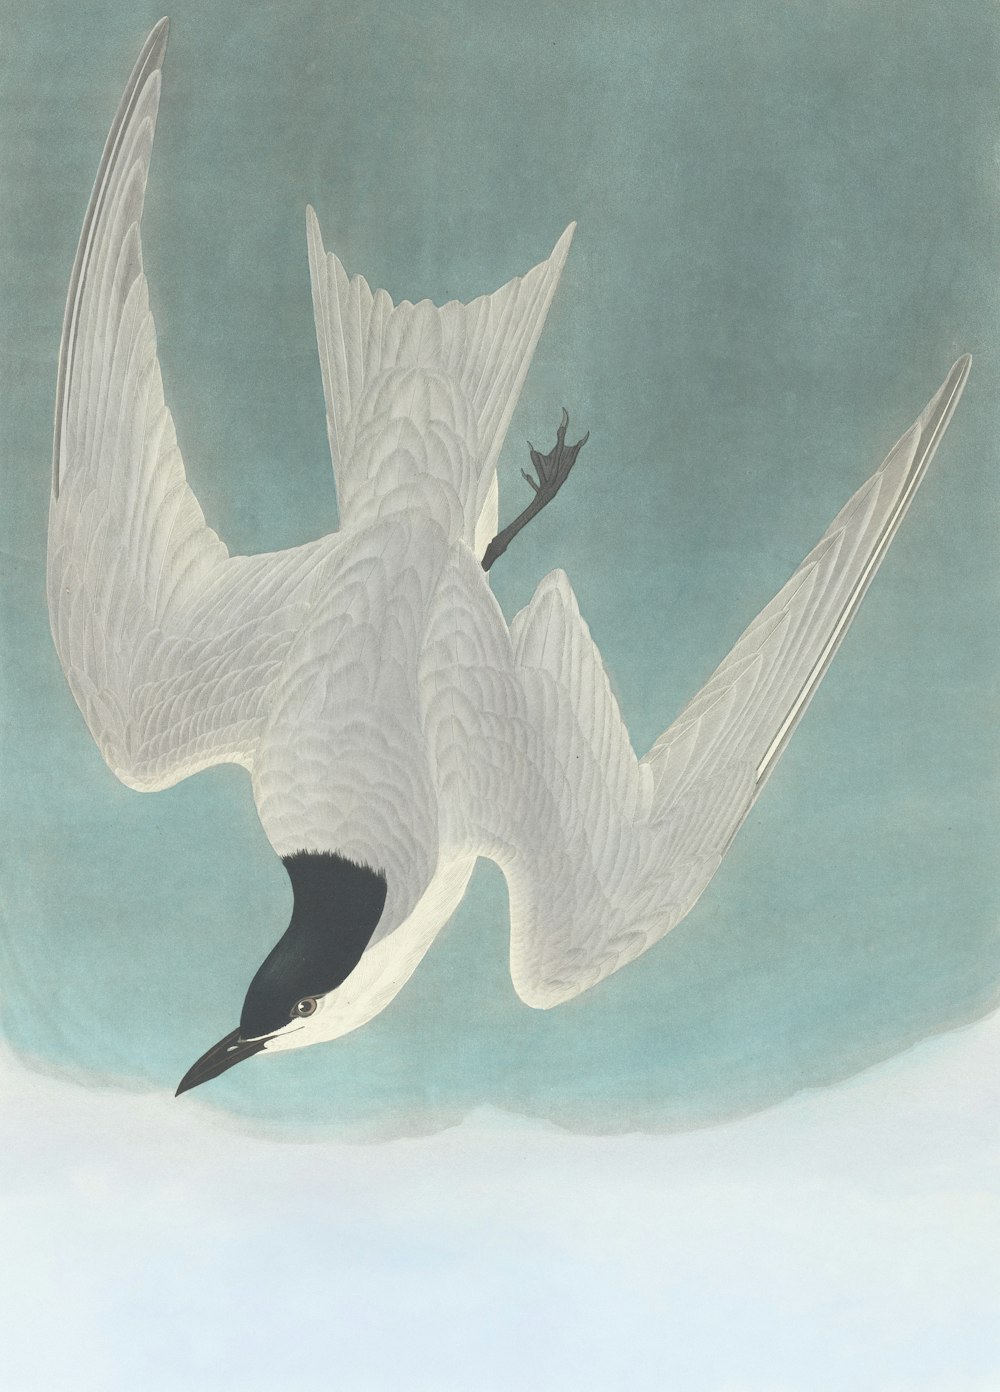 un dipinto di un uccello che vola nel cielo